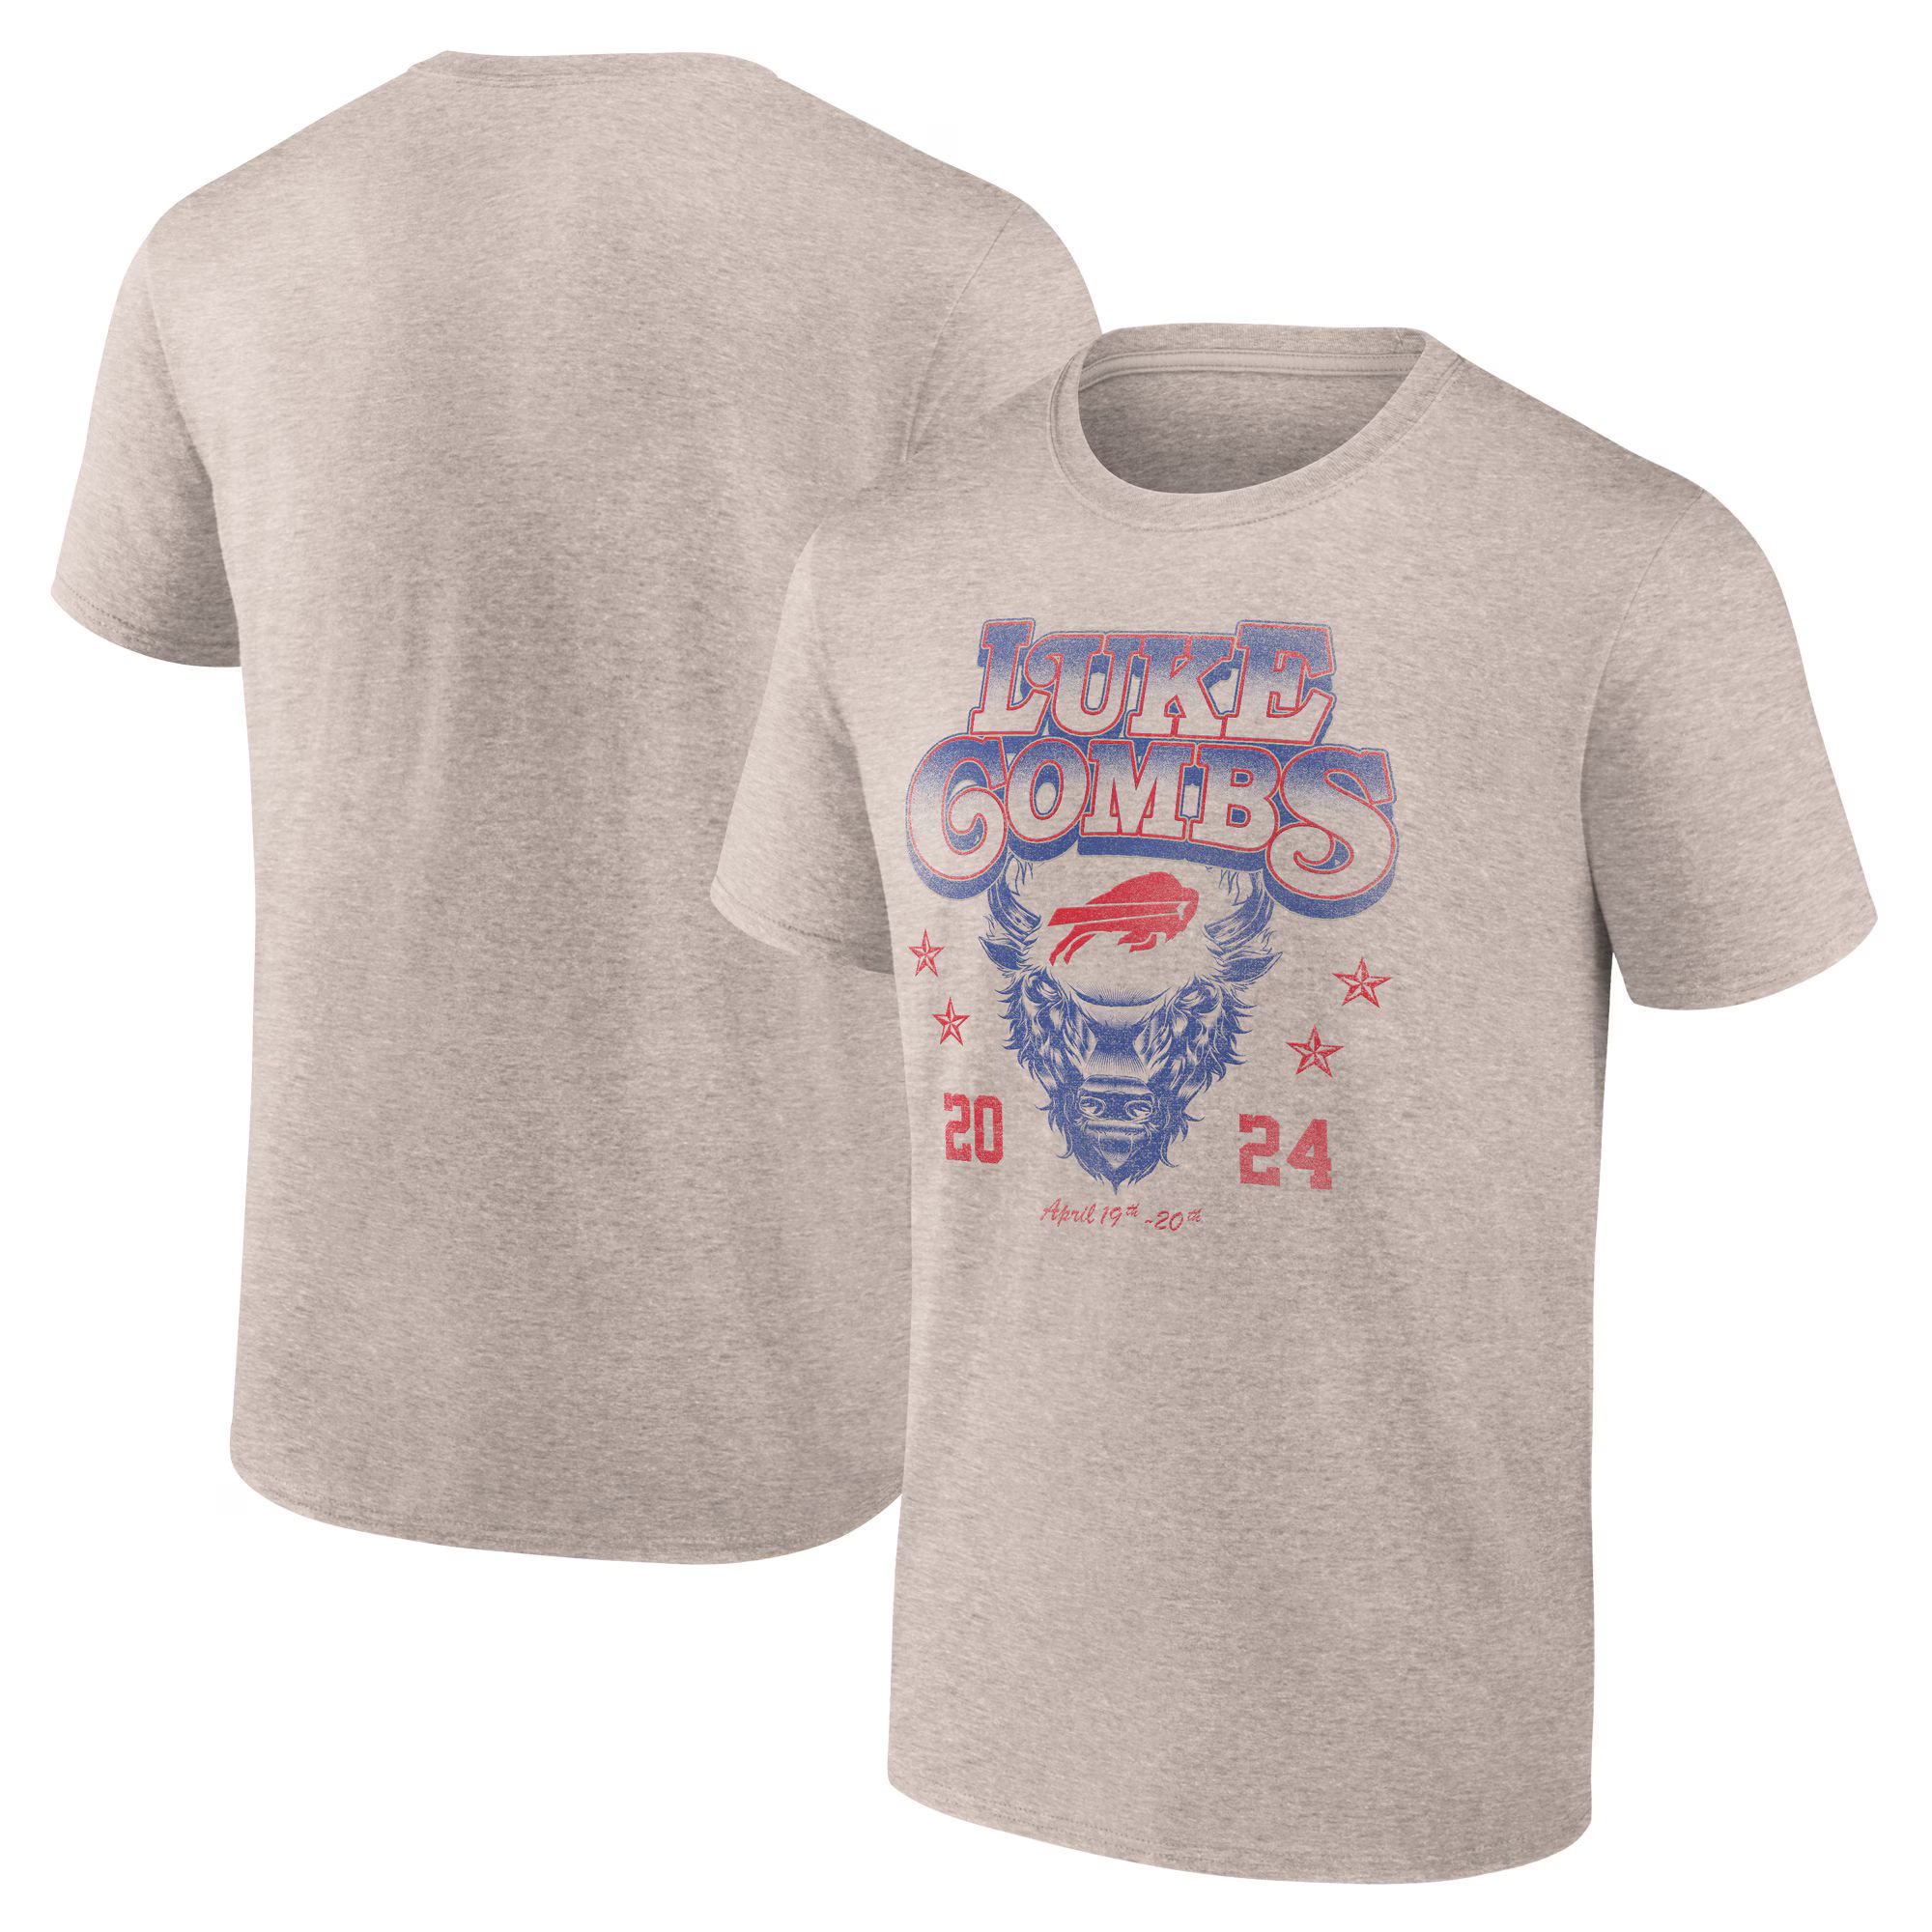 Luke Combs x Buffalo Bills Fanatics Branded Growin' Up and Gettin' Old Tour T-Shirt - Tan | Fanatics